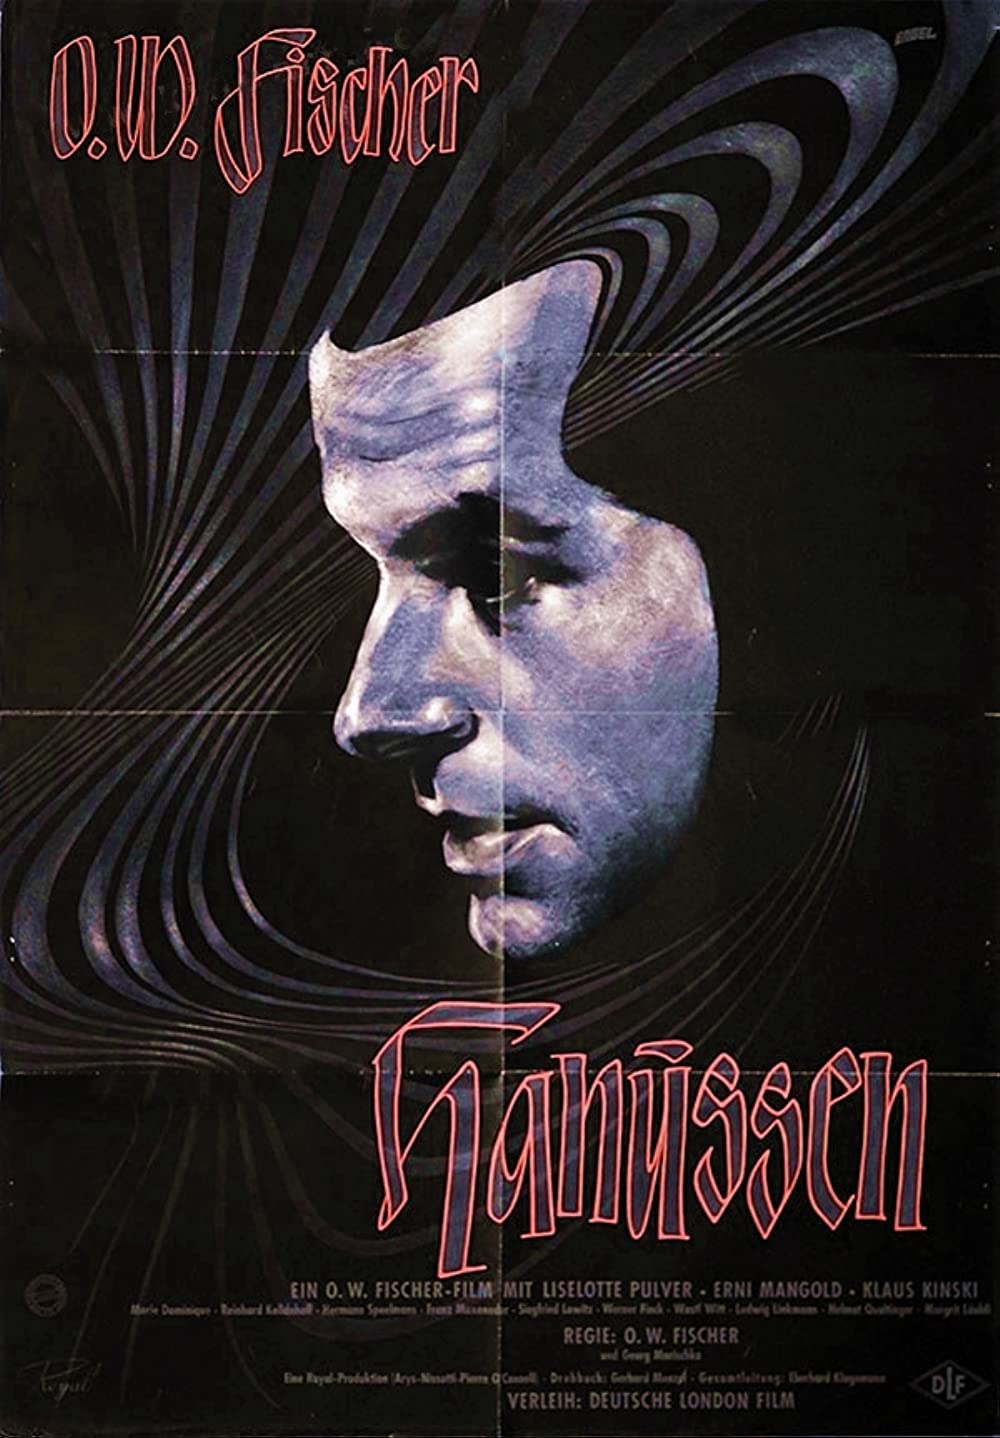 Filmbeschreibung zu Hanussen (1955)